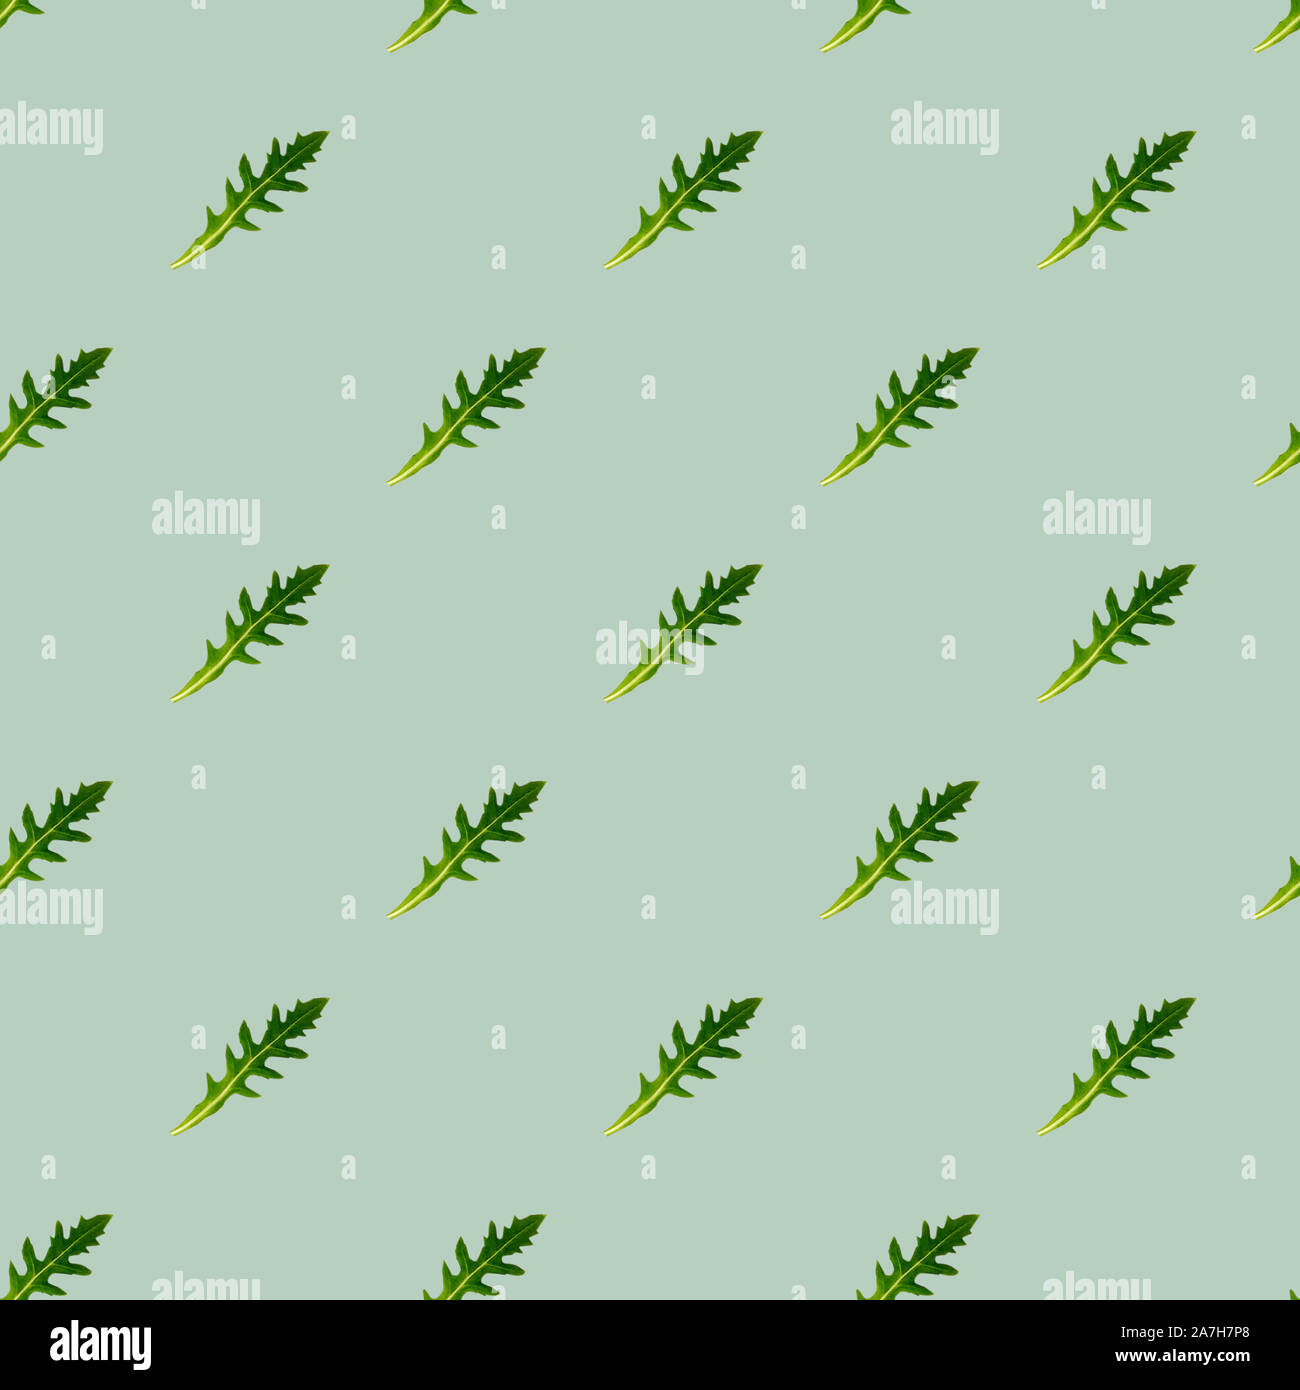 Pattern of fresh arugula salad leaves on green background. Isometric view. Stock Photo